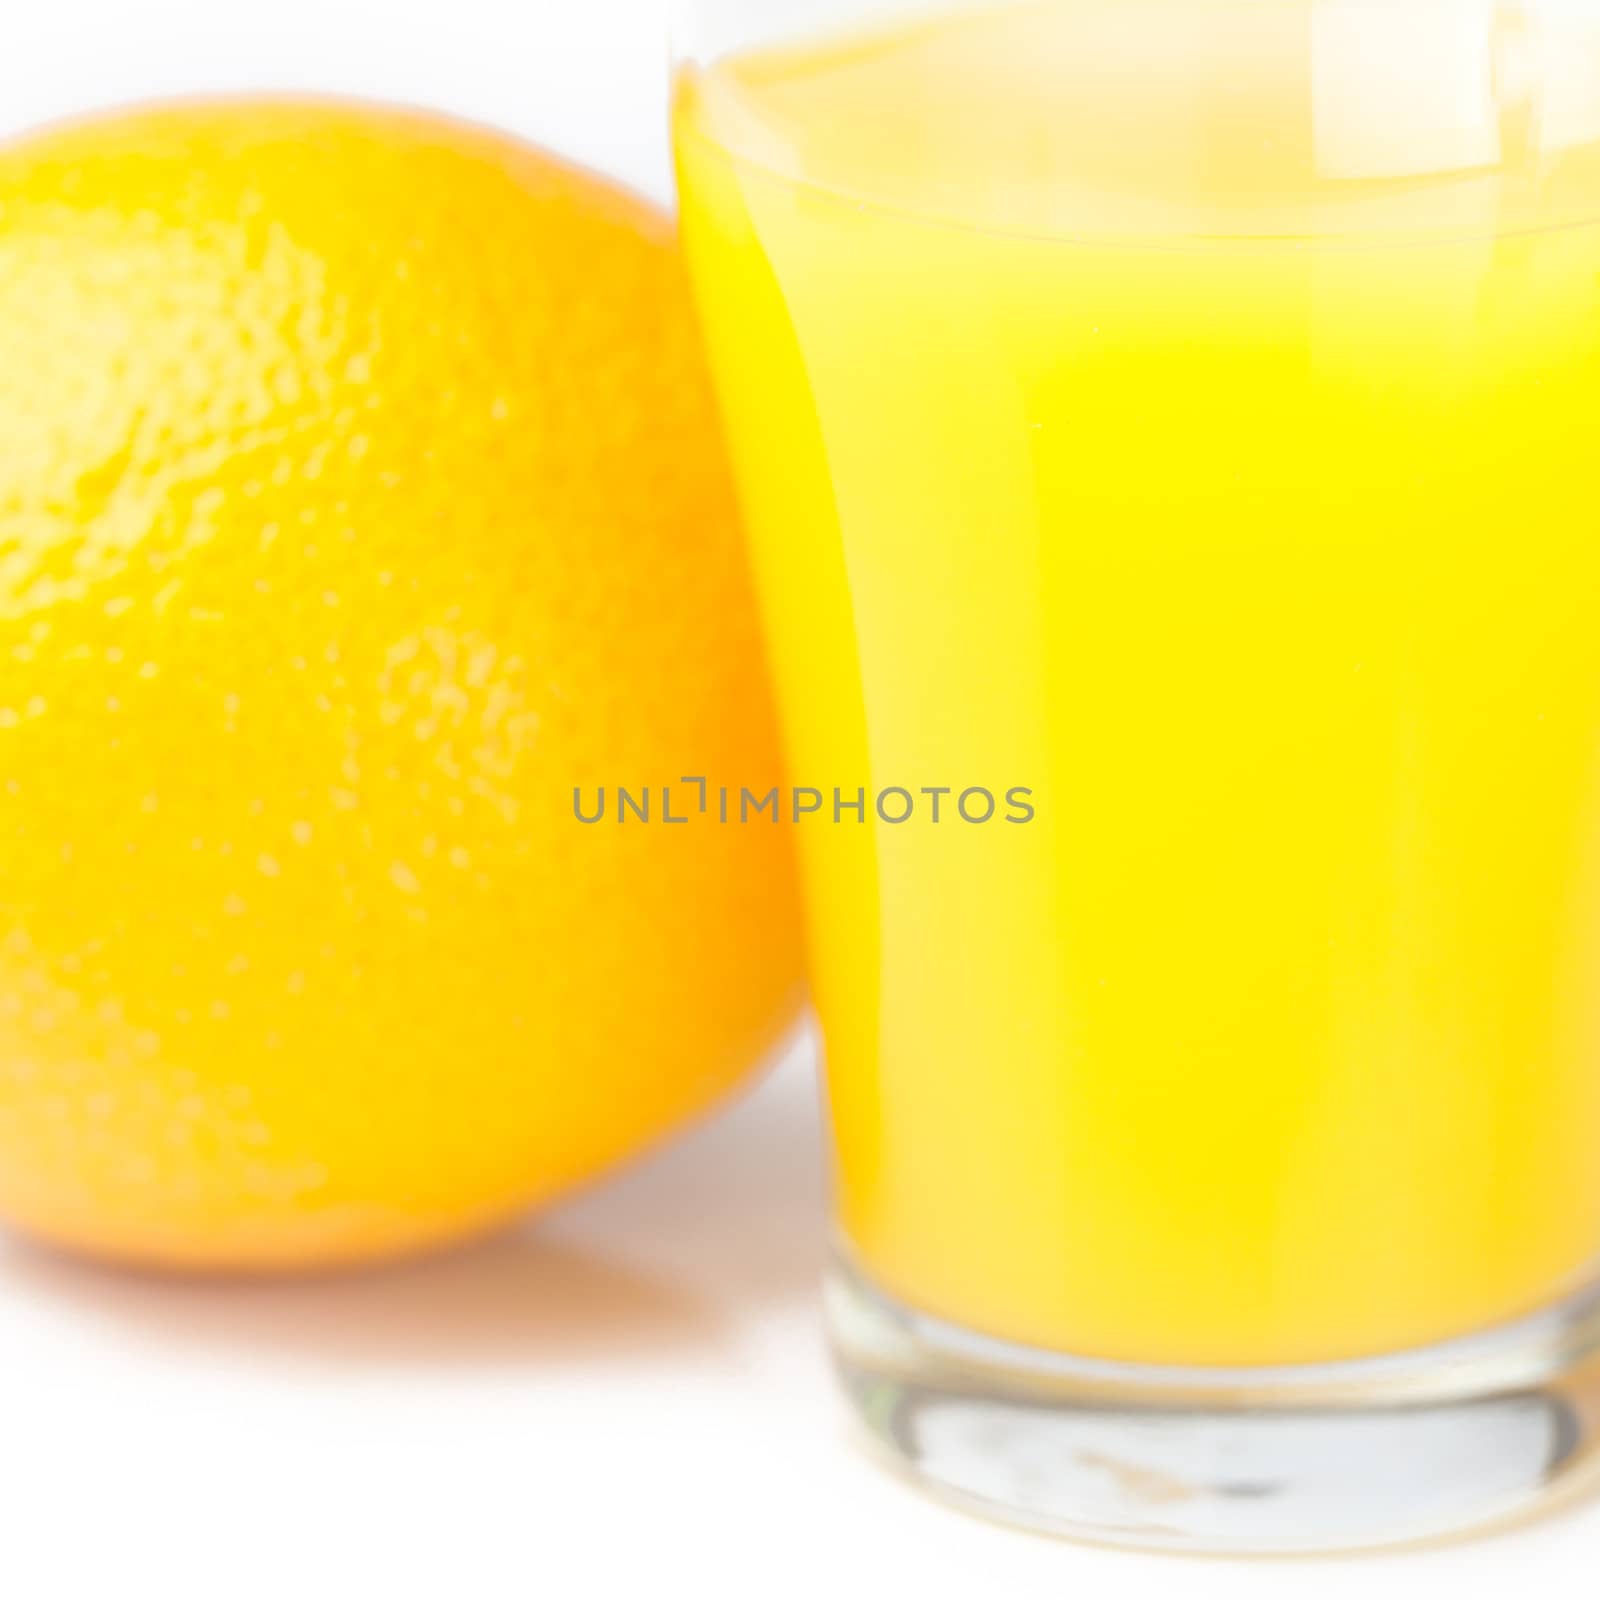 orange and a glass of orange juice isolated on white